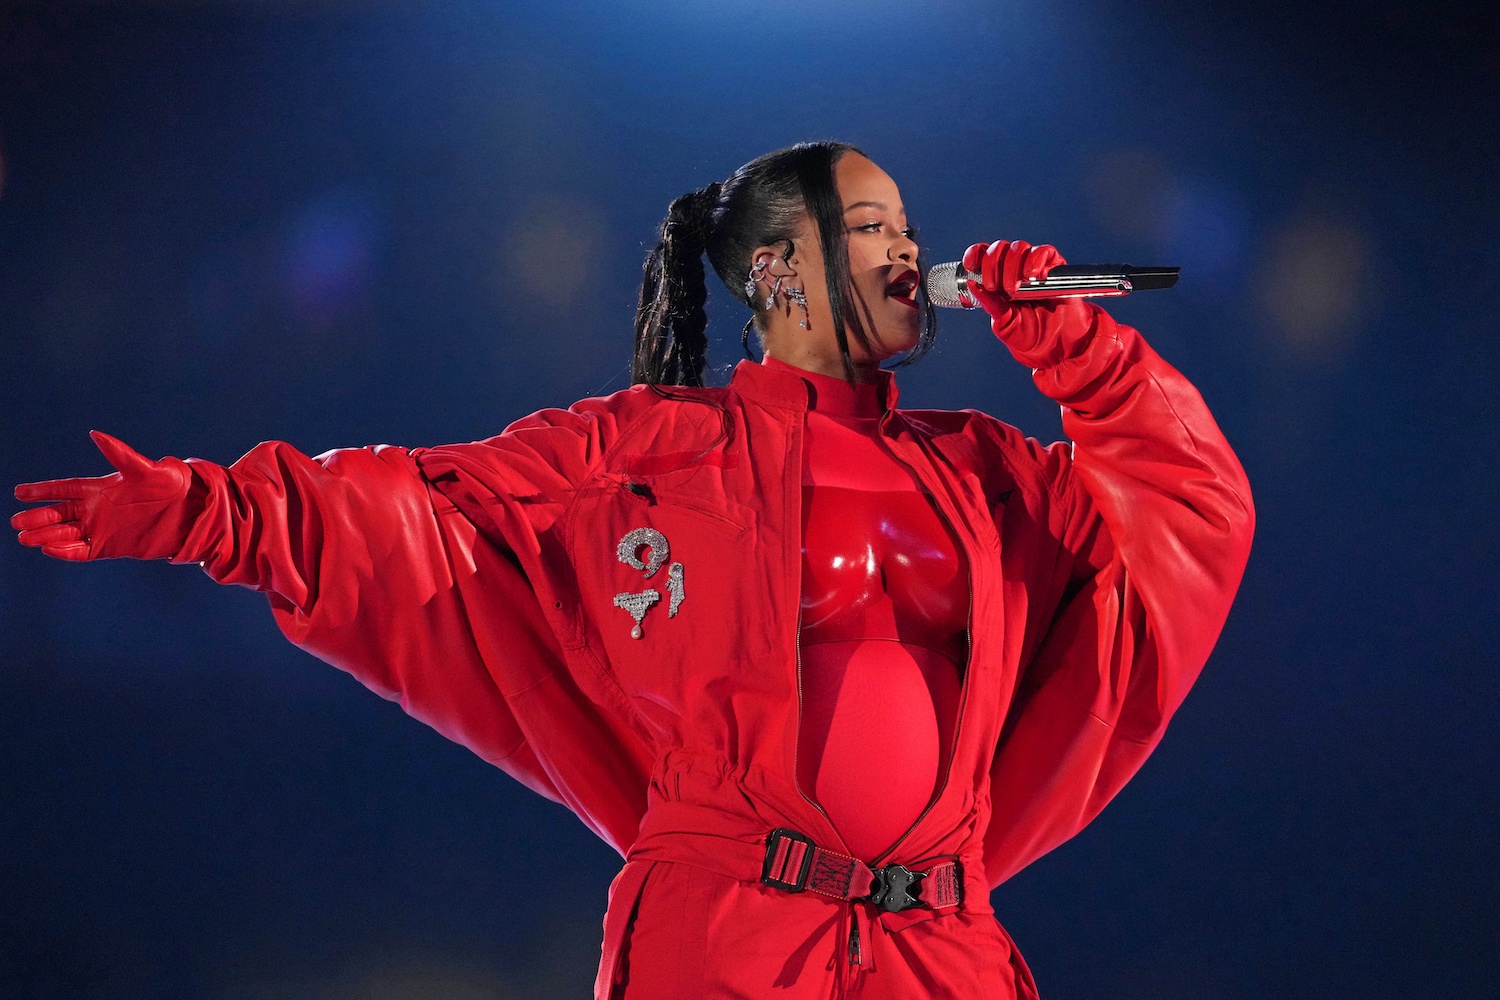 Feb 12, 2023; Glendale, Arizona, US; Recordist artist Rihanna performs during the halftime show of Super Bowl LVII at State Farm Stadium. Mandatory Credit: Kirby Lee-USA TODAY Sports